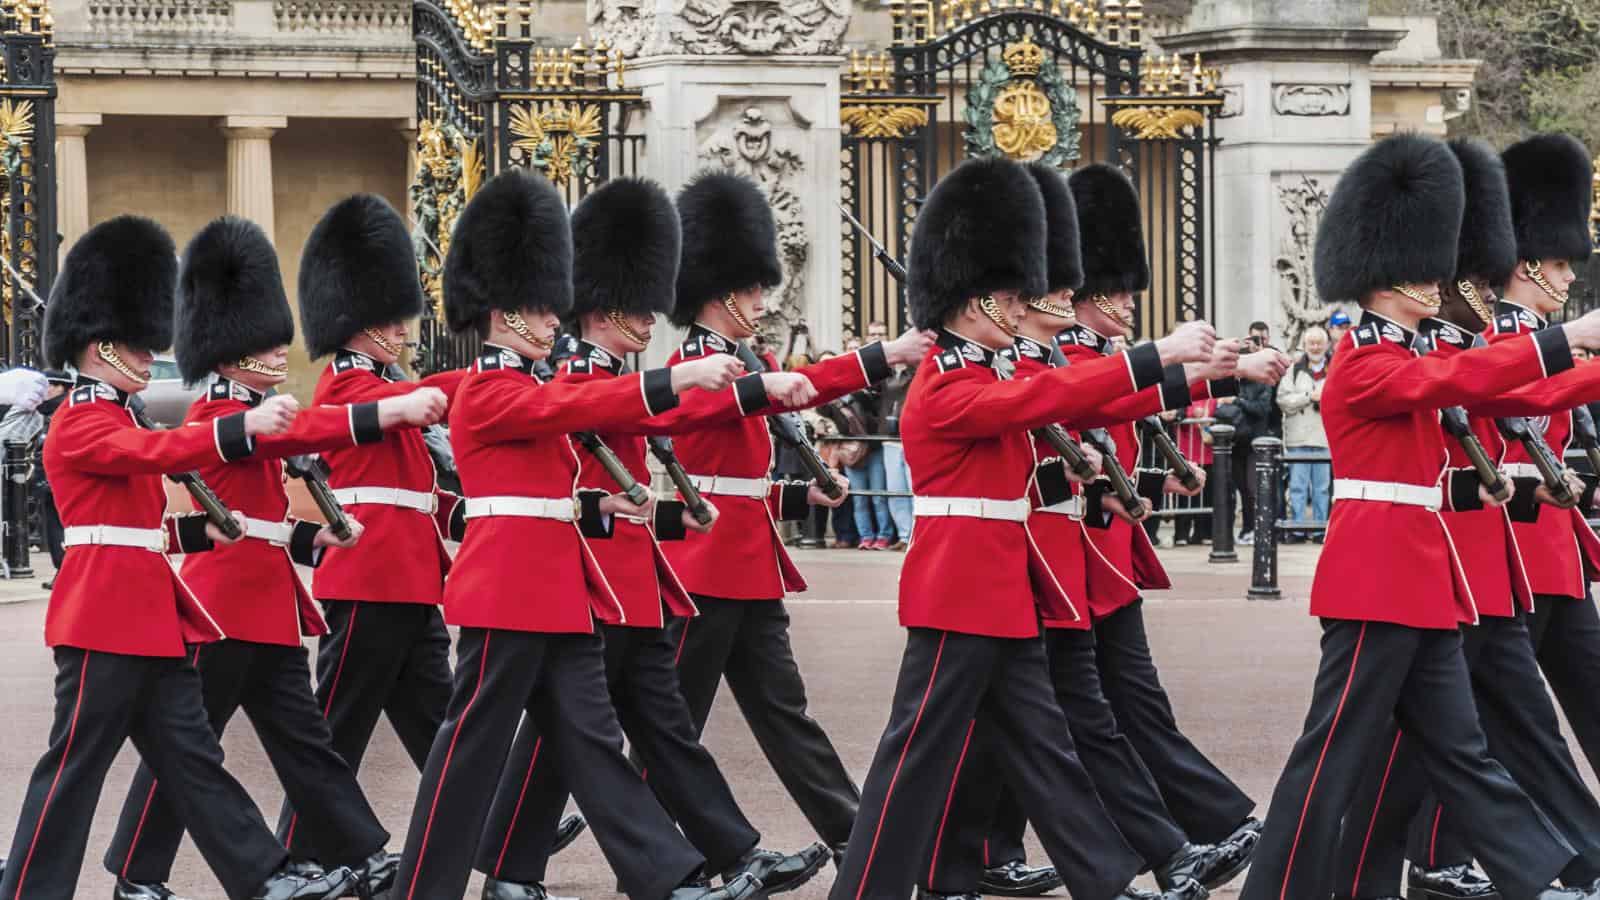 London_s Royal Guard